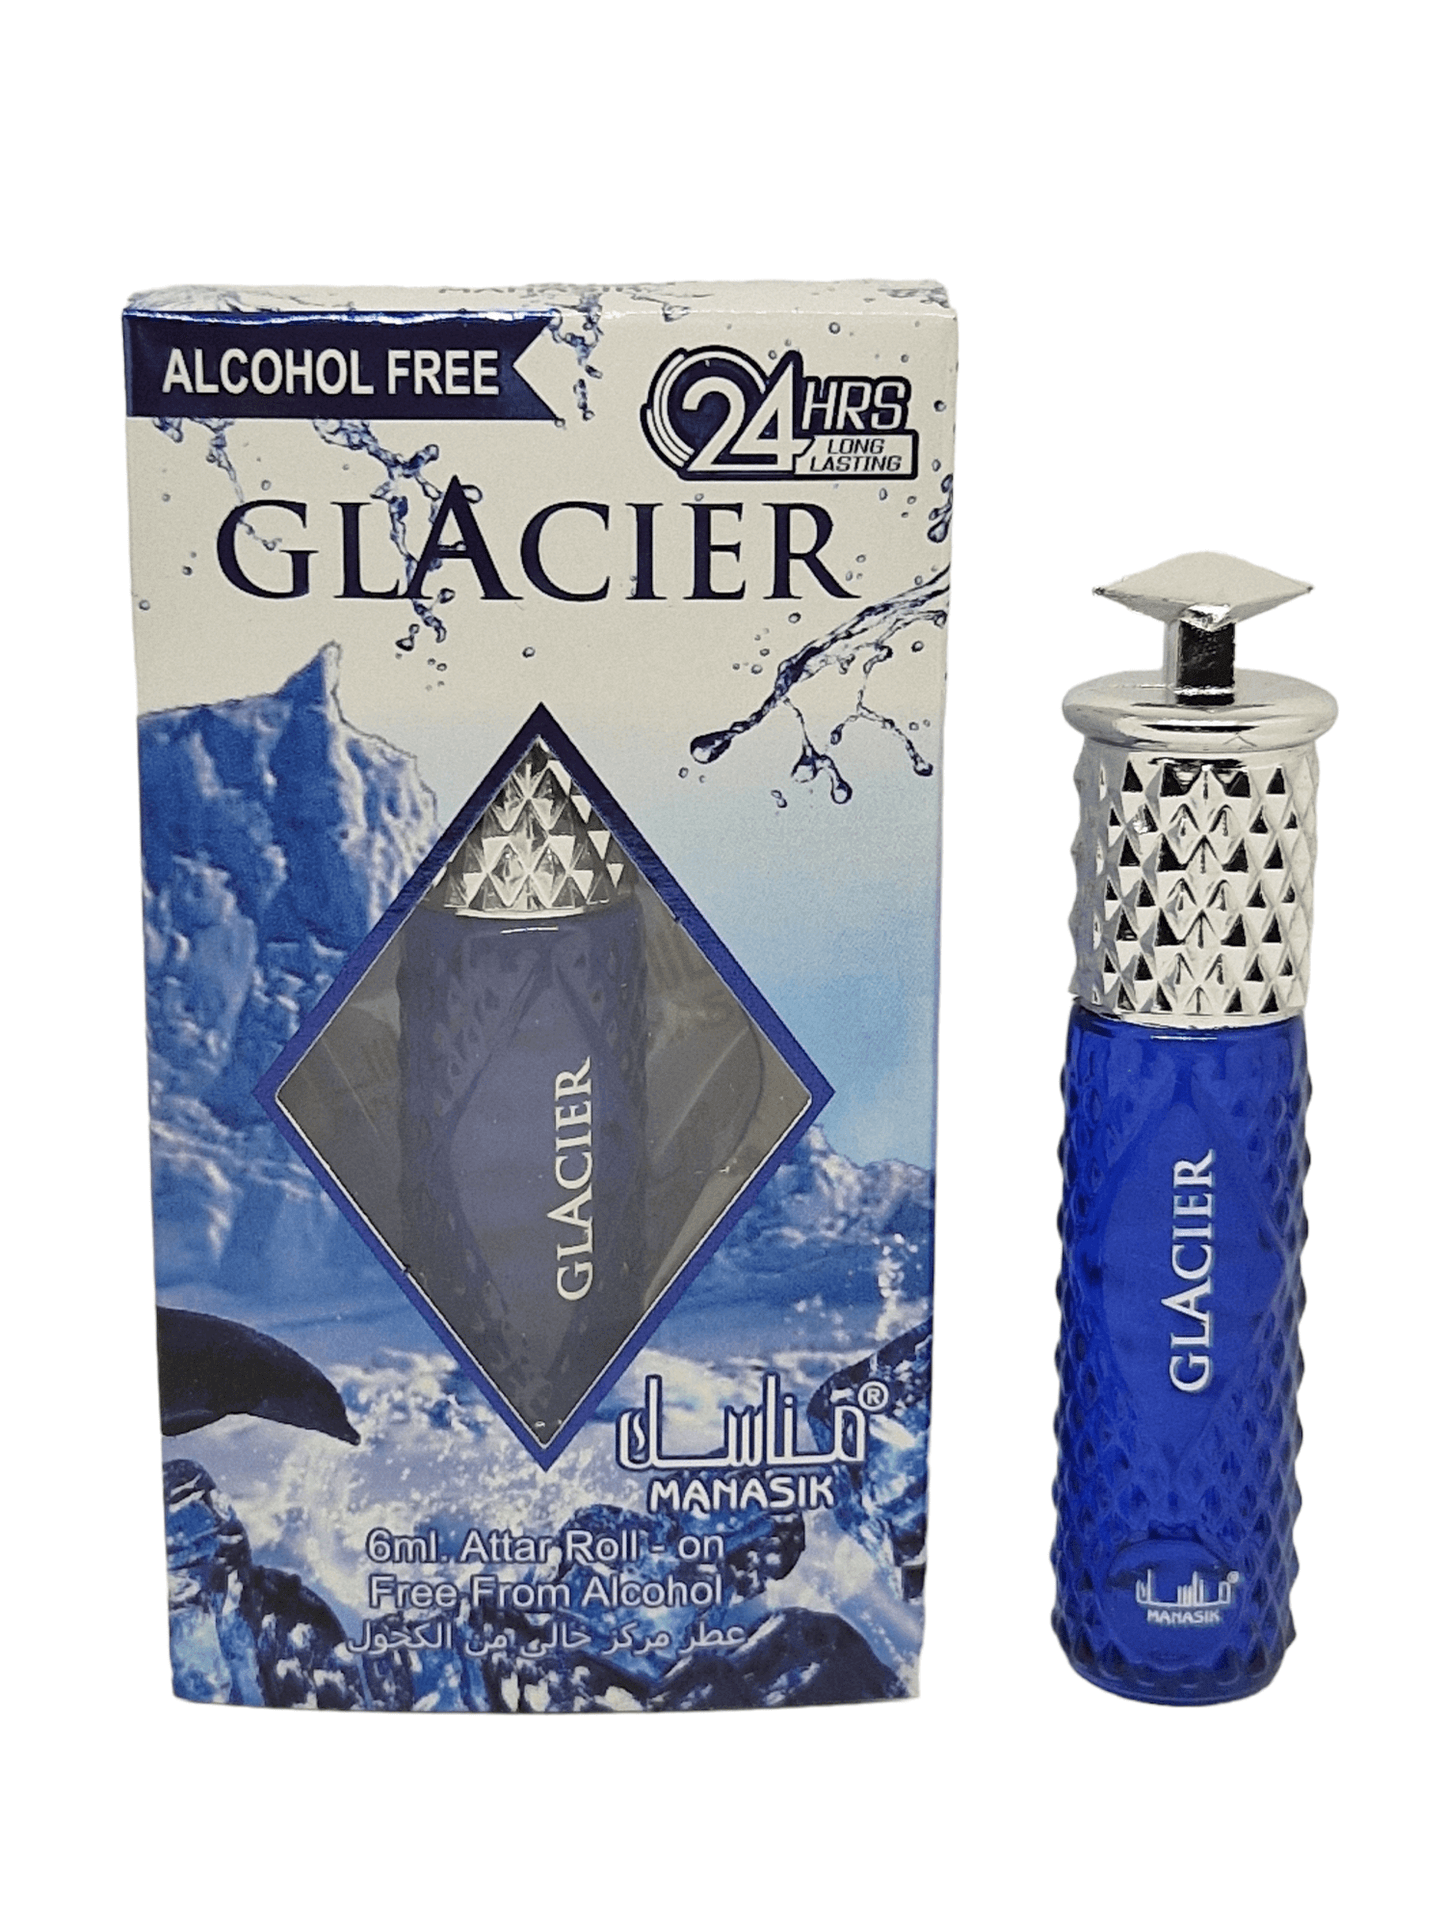 Glacier - 6ml roll on - Manasik - Alcohol Free